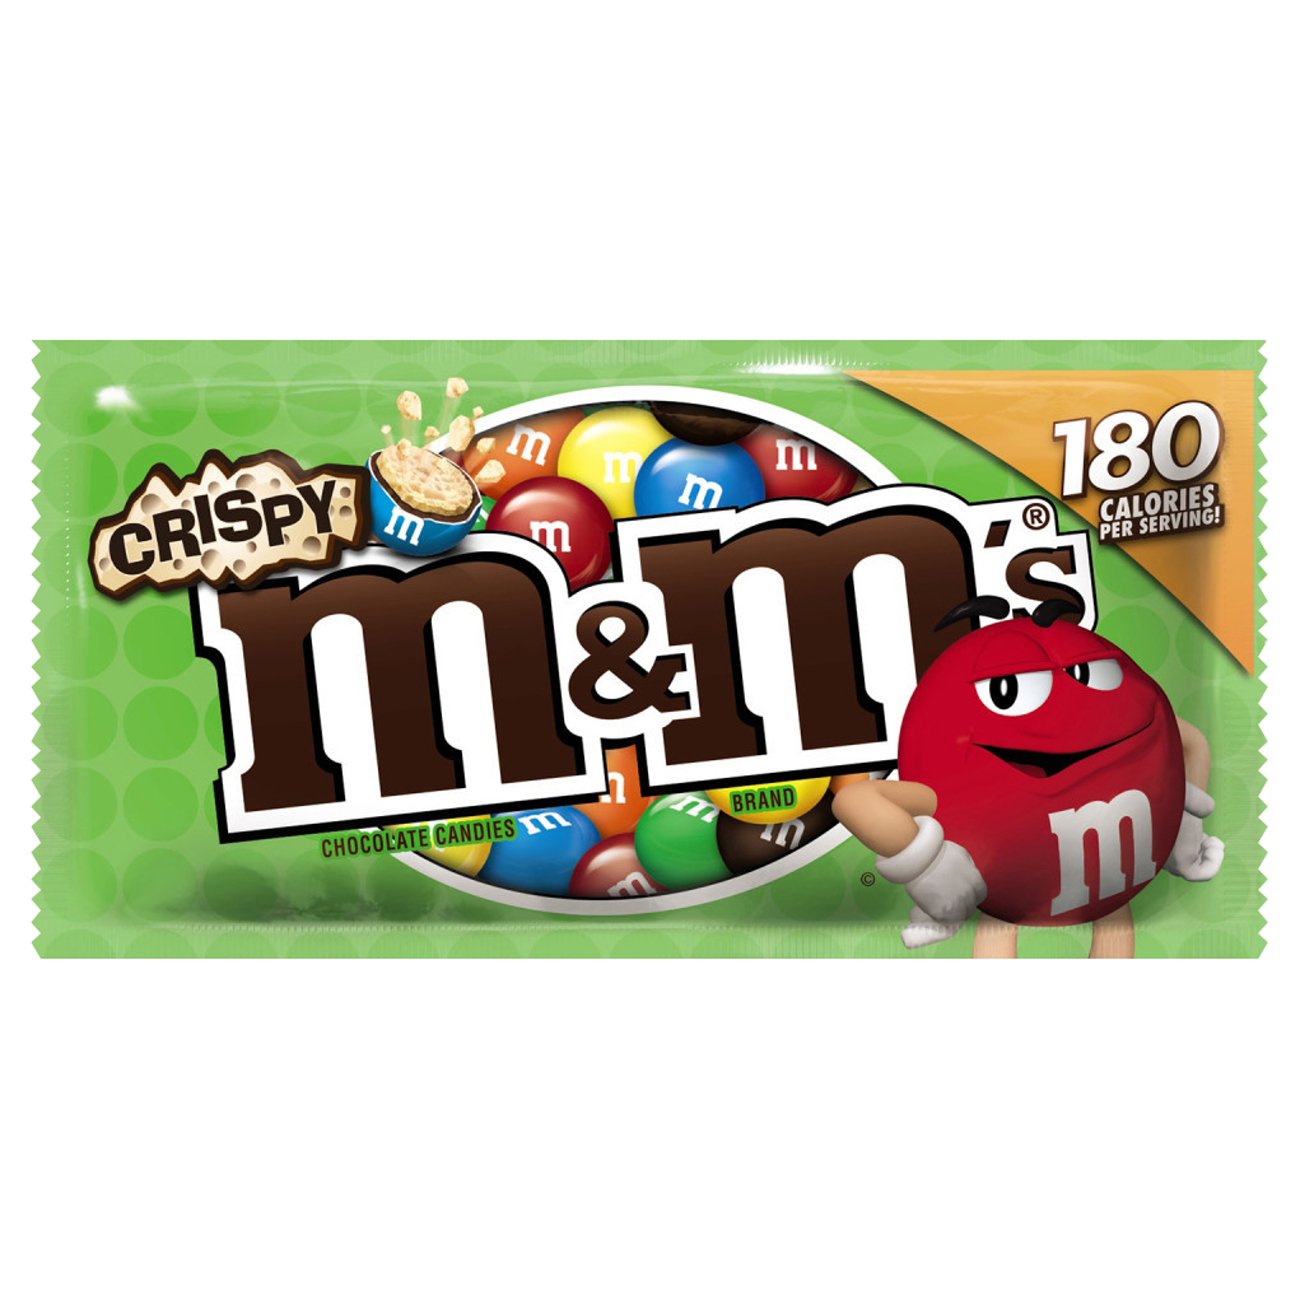 M&M's Crispy Chocolate Candies - Shop Candy at H-E-B